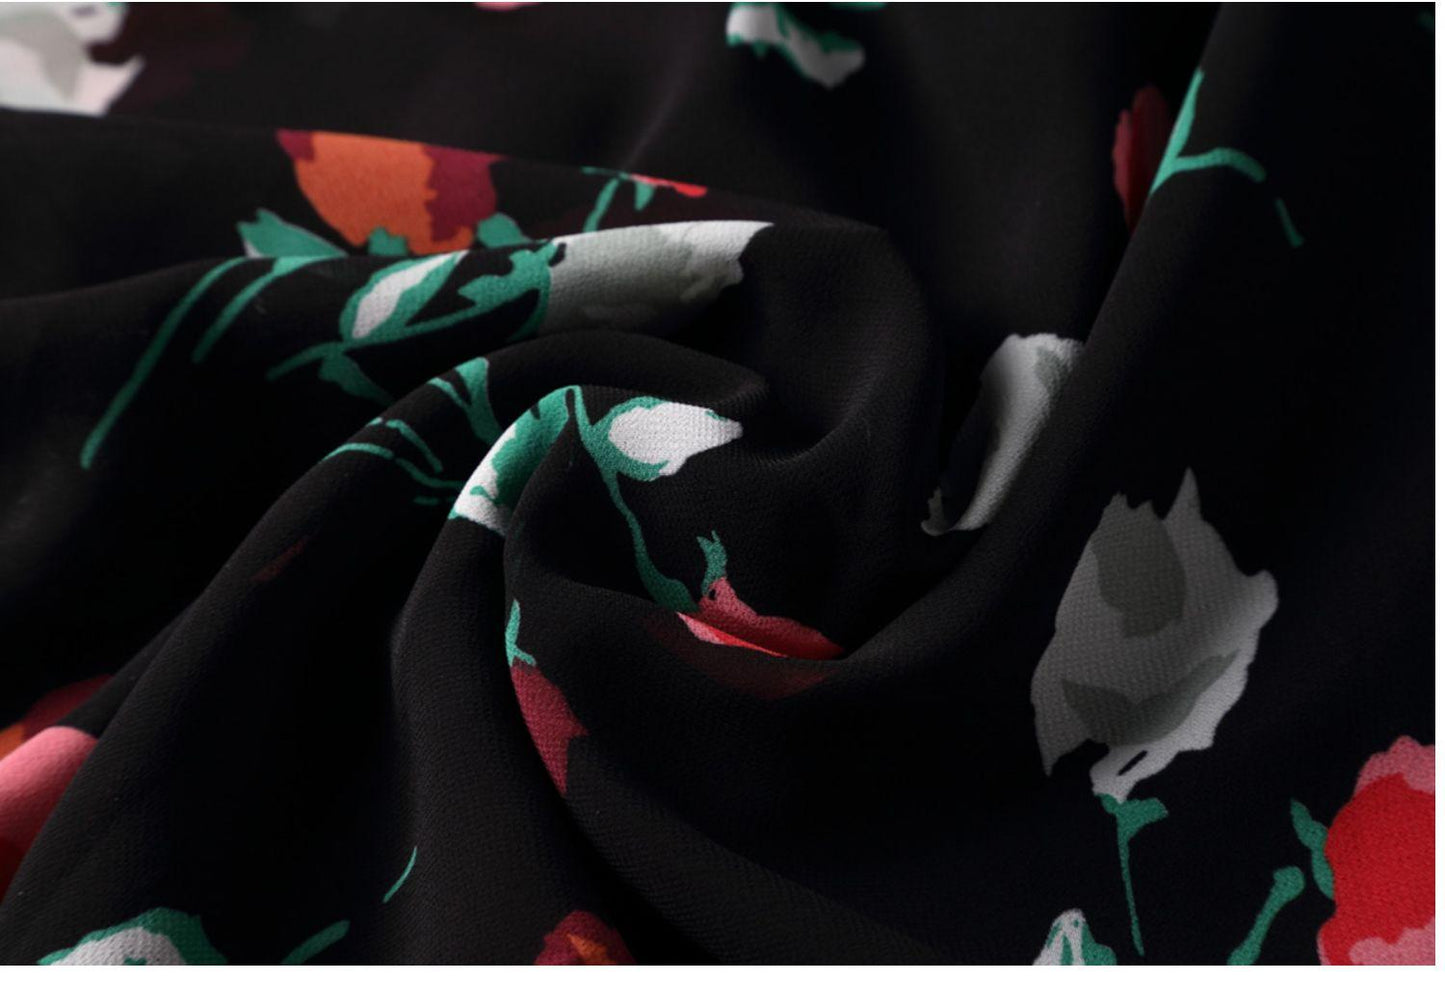 Designer lapel simple elegant floral print irregular swing chiffon lbd black floral dress - Inka